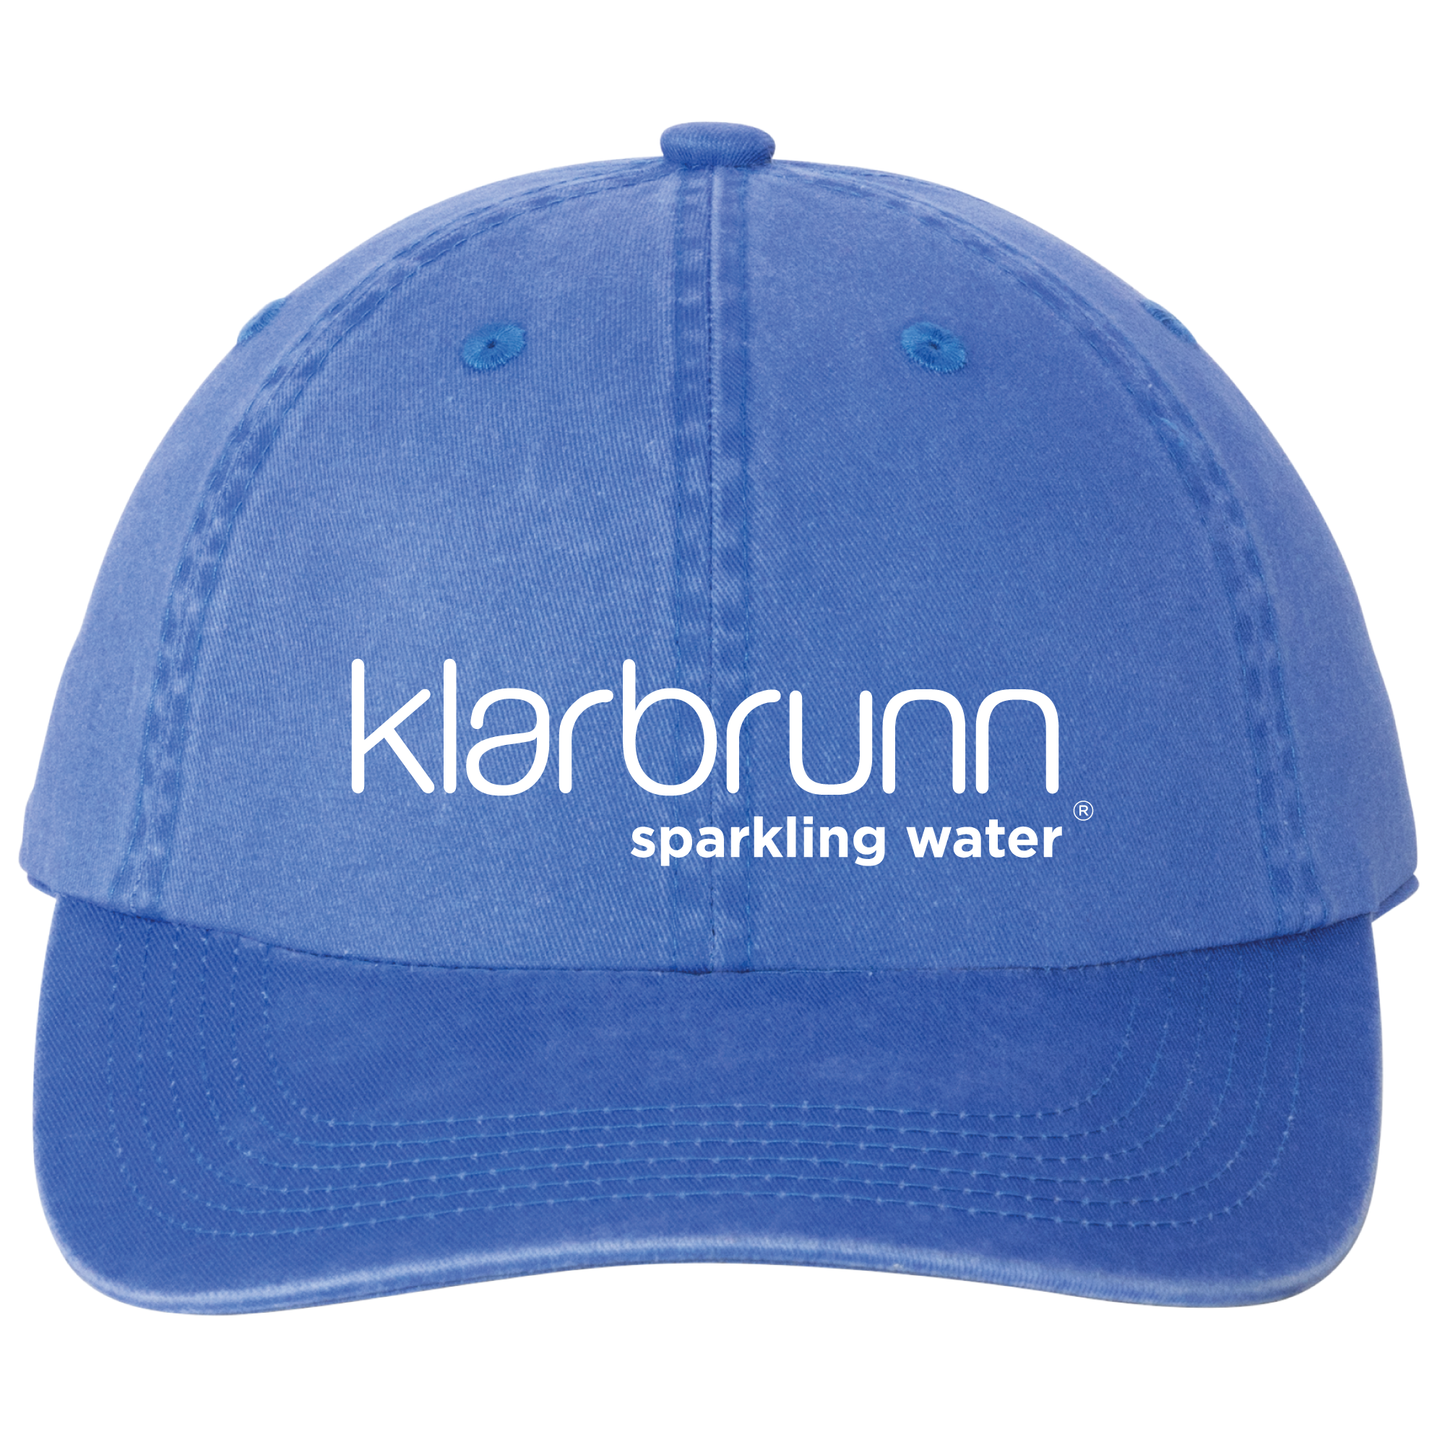 Klarbrunn Dad Hat - Faded Blue